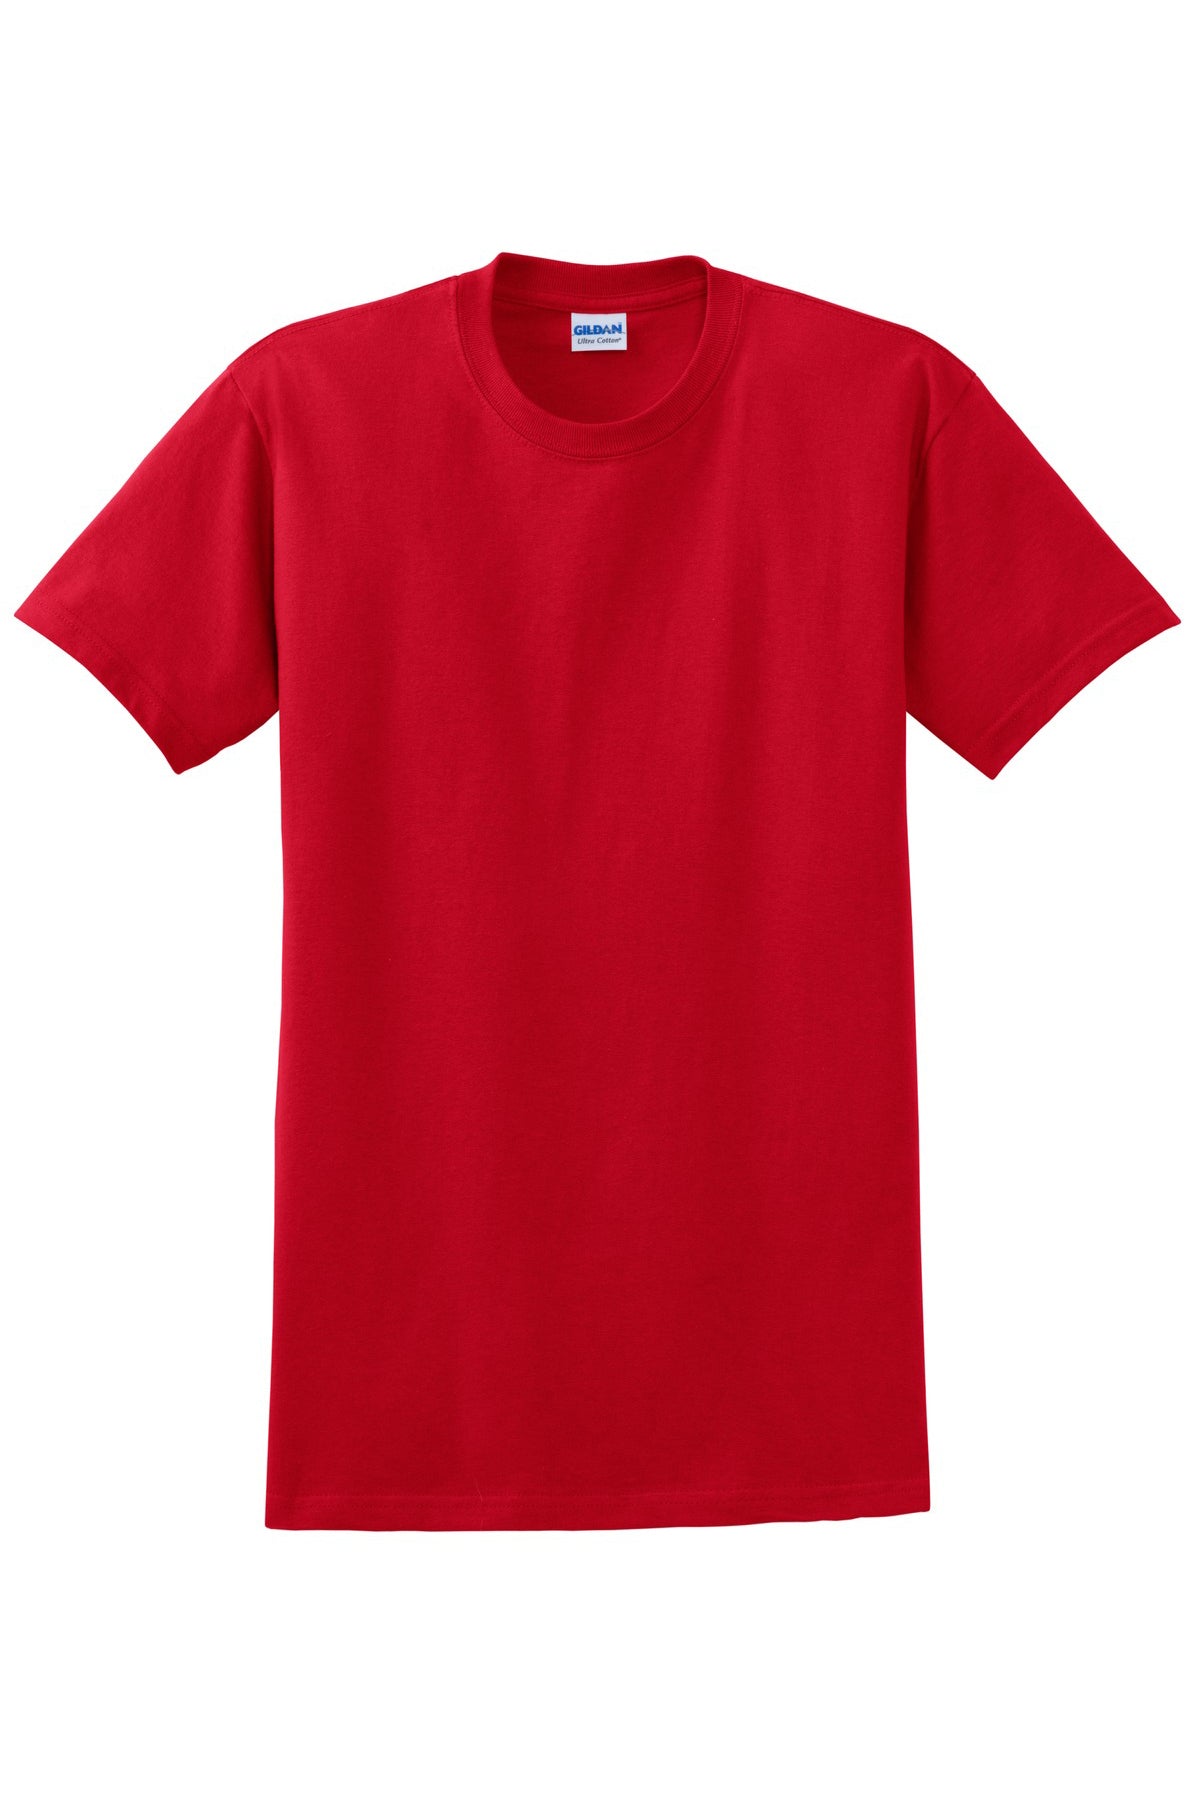 Sample T-Shirt (Budget)